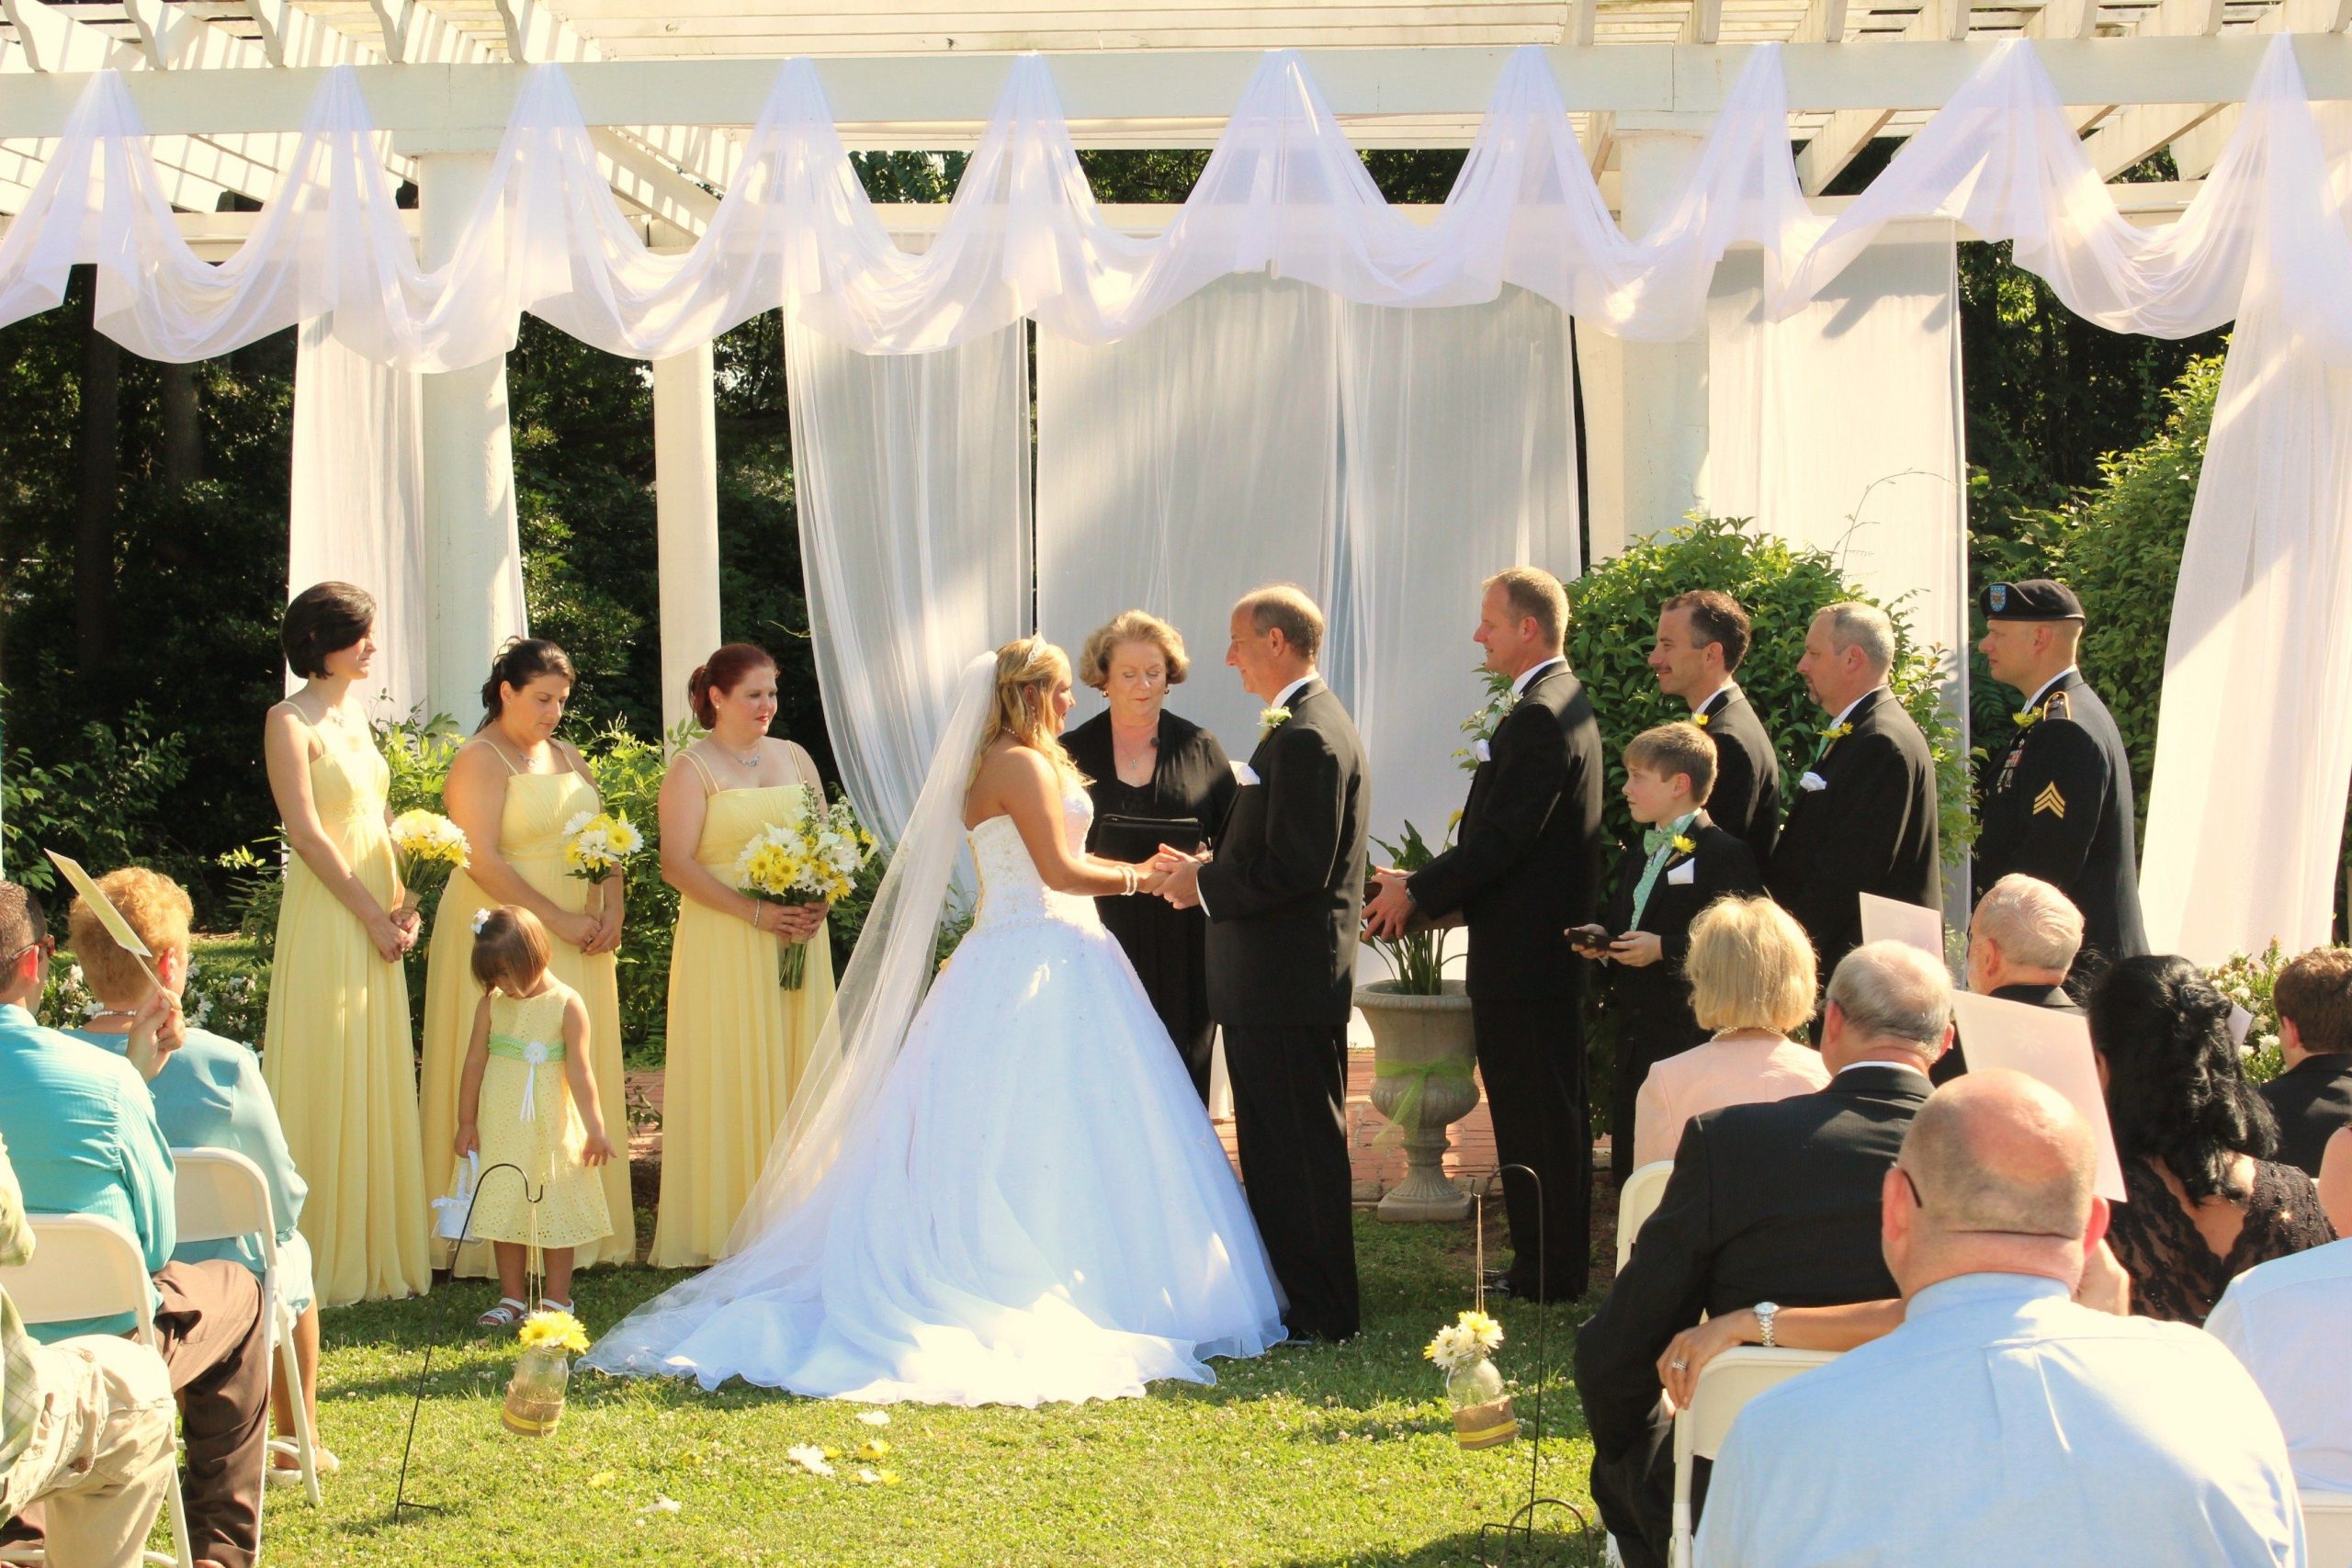 Wedding Ceremony in progress at Augusta Manor in Greenville, SC # ...